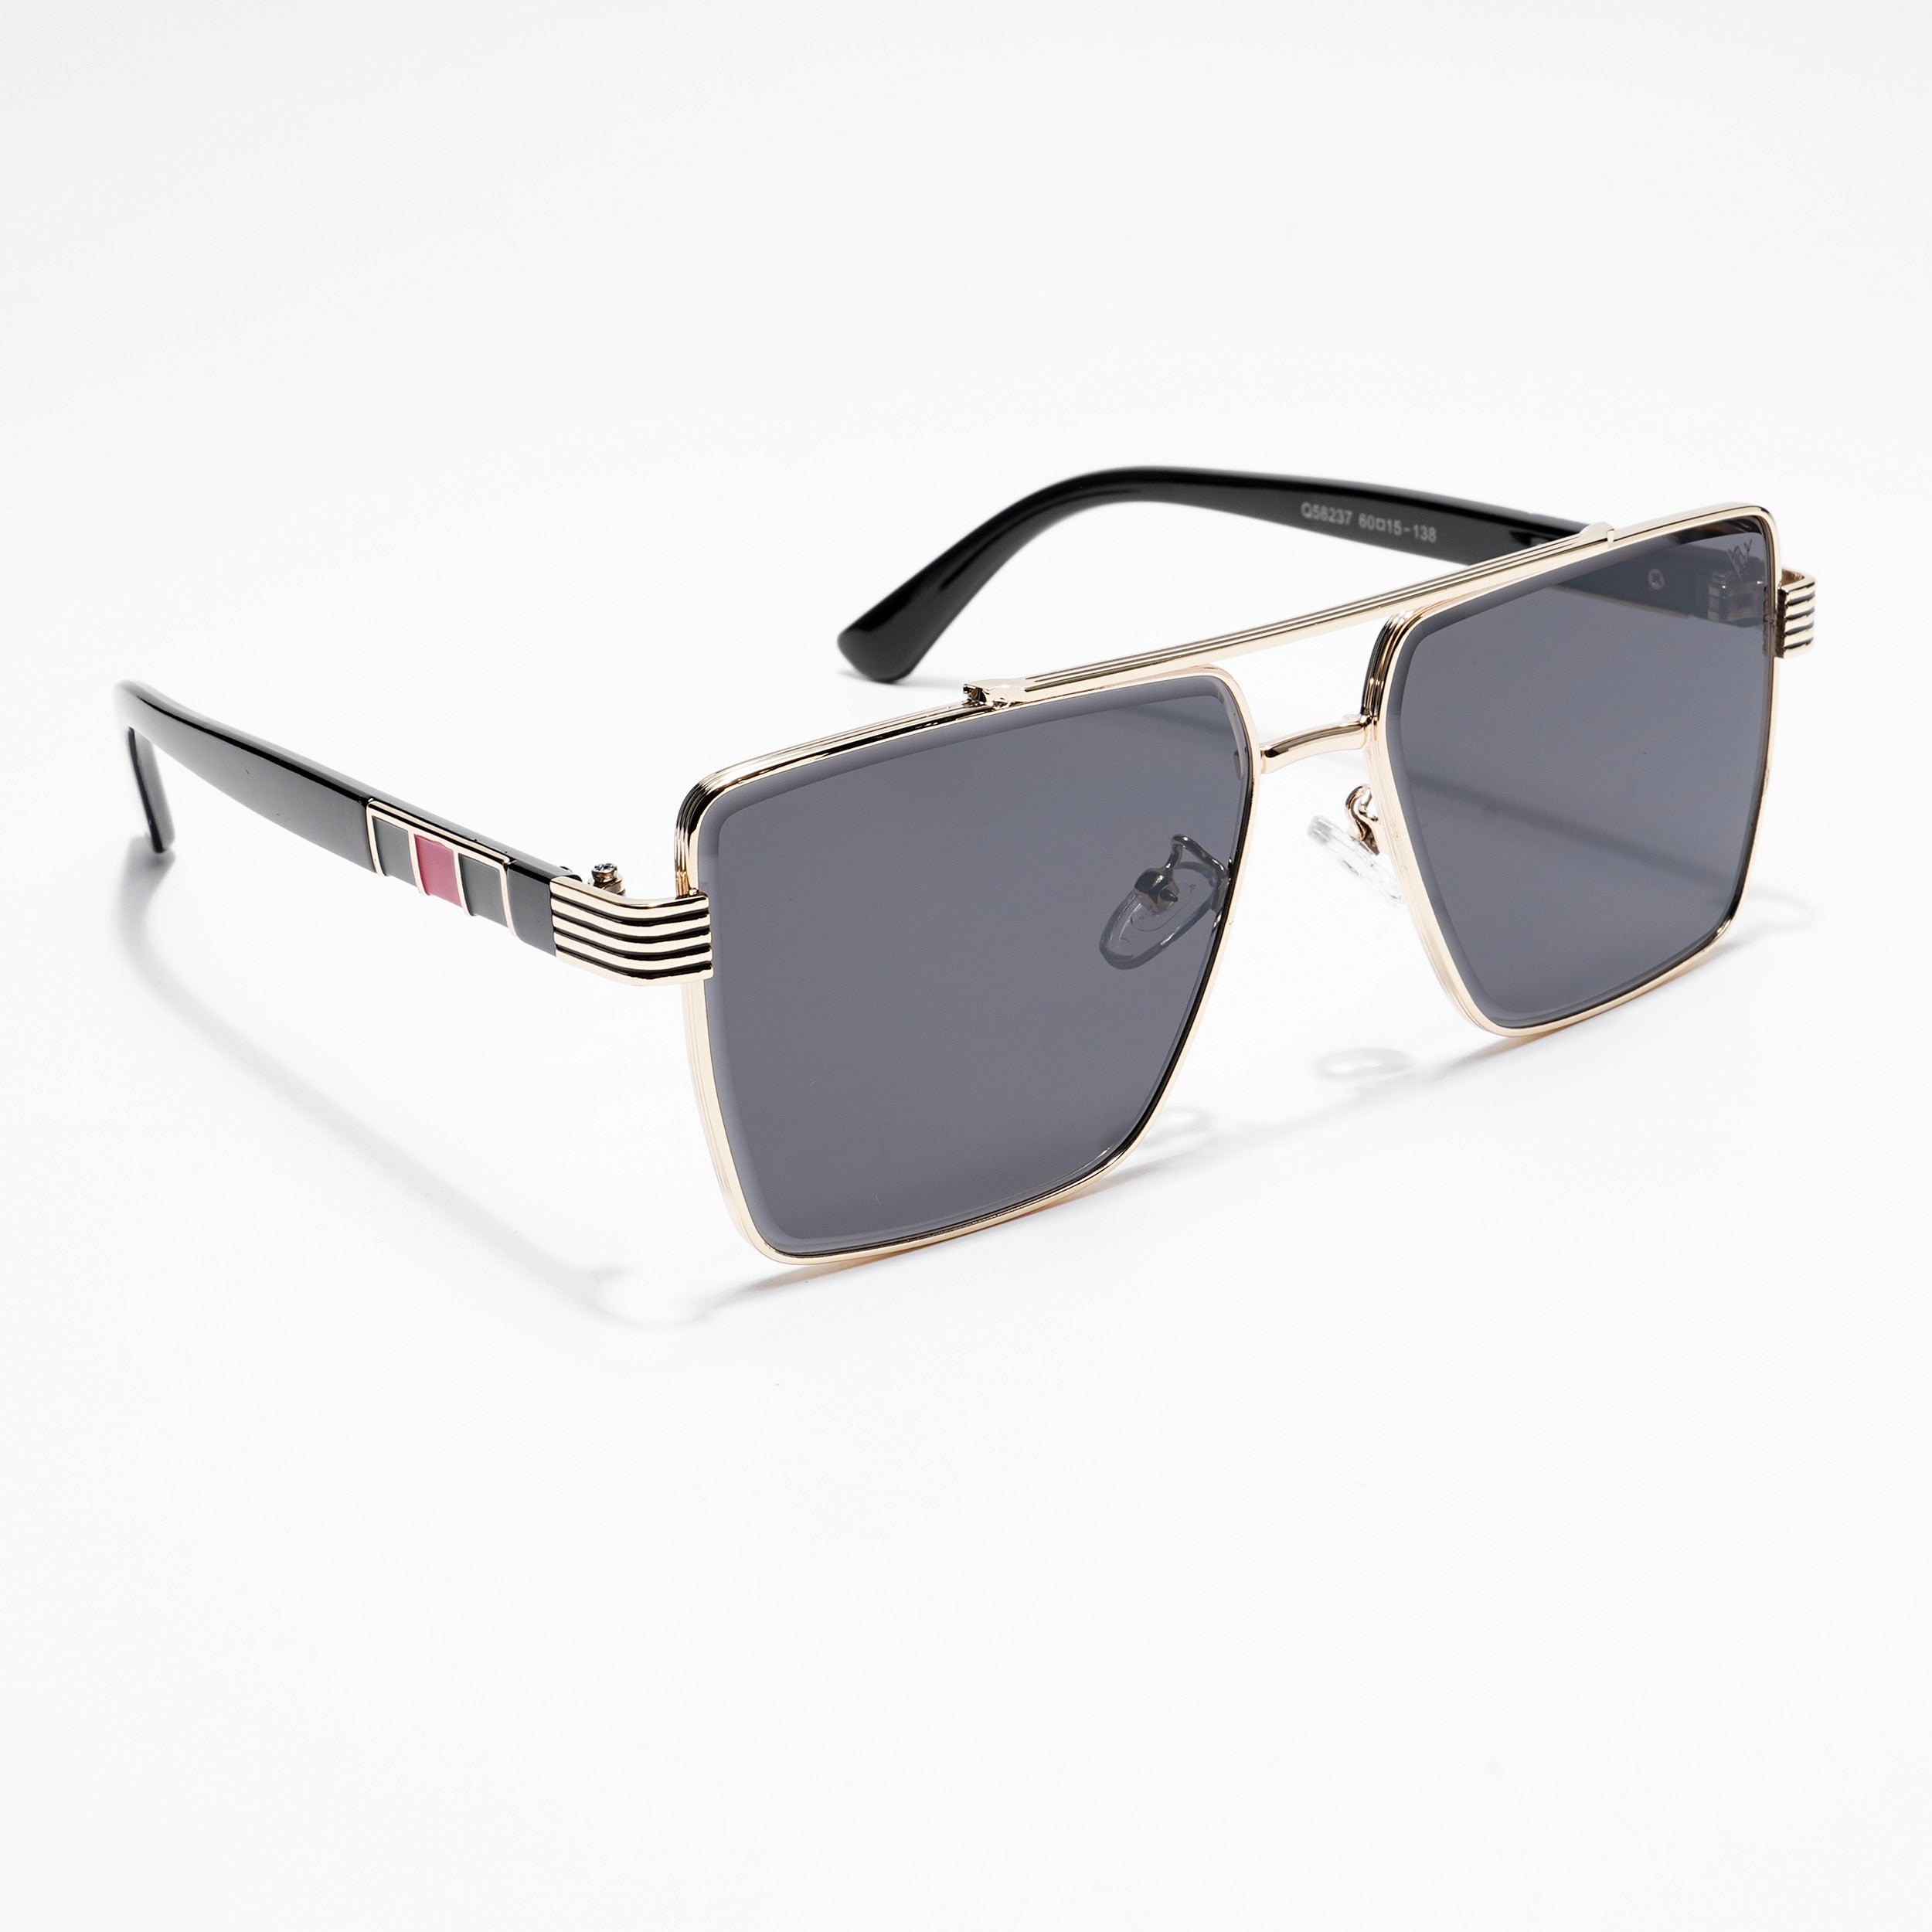 Voyage Black Wayfarer Sunglasses for Men & Women - MG4175